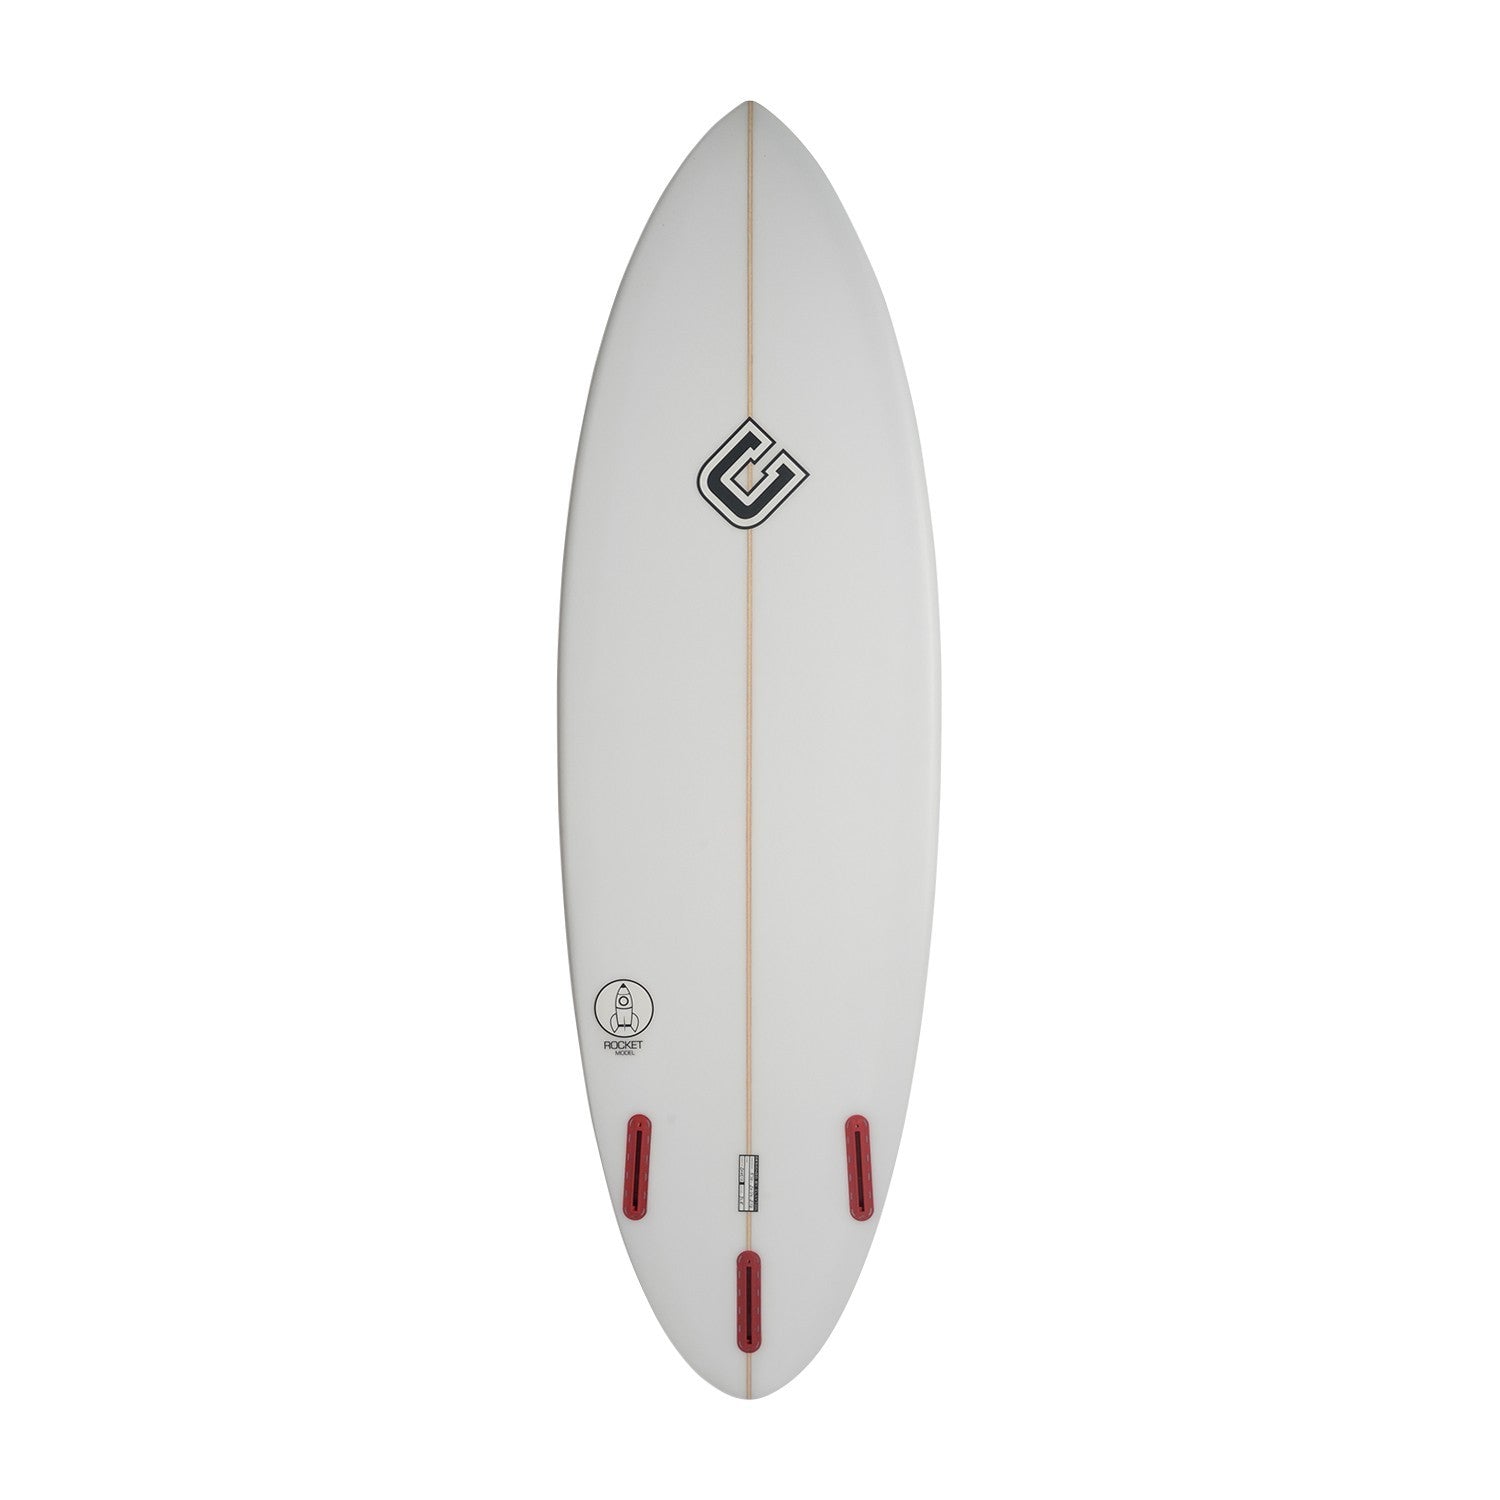 CLAYTON Surfboards - Rocket (PU) Futures - 6'0